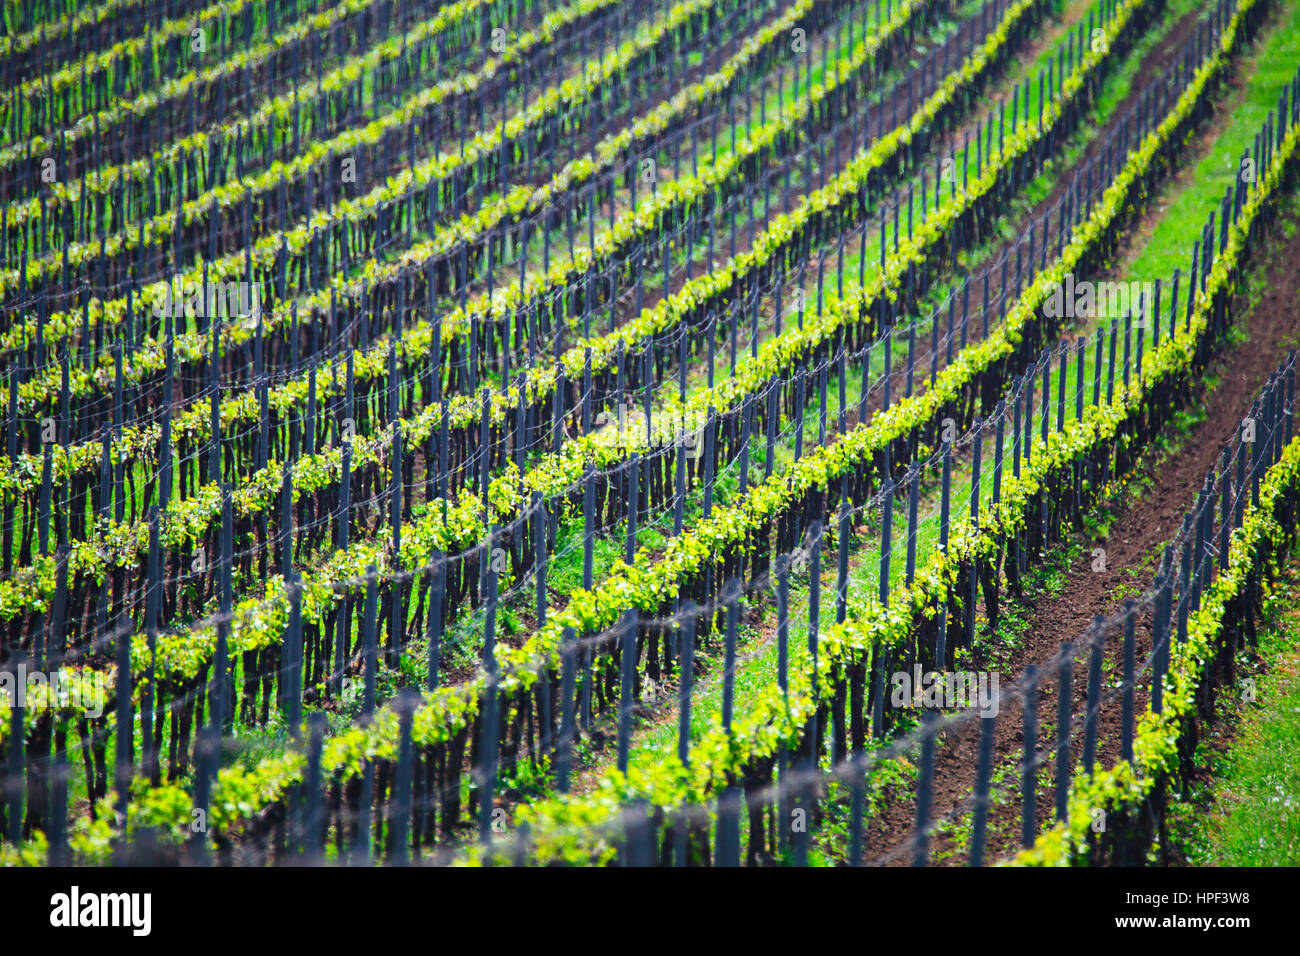 France green vineyard trees rawsin summer time Stock Photo